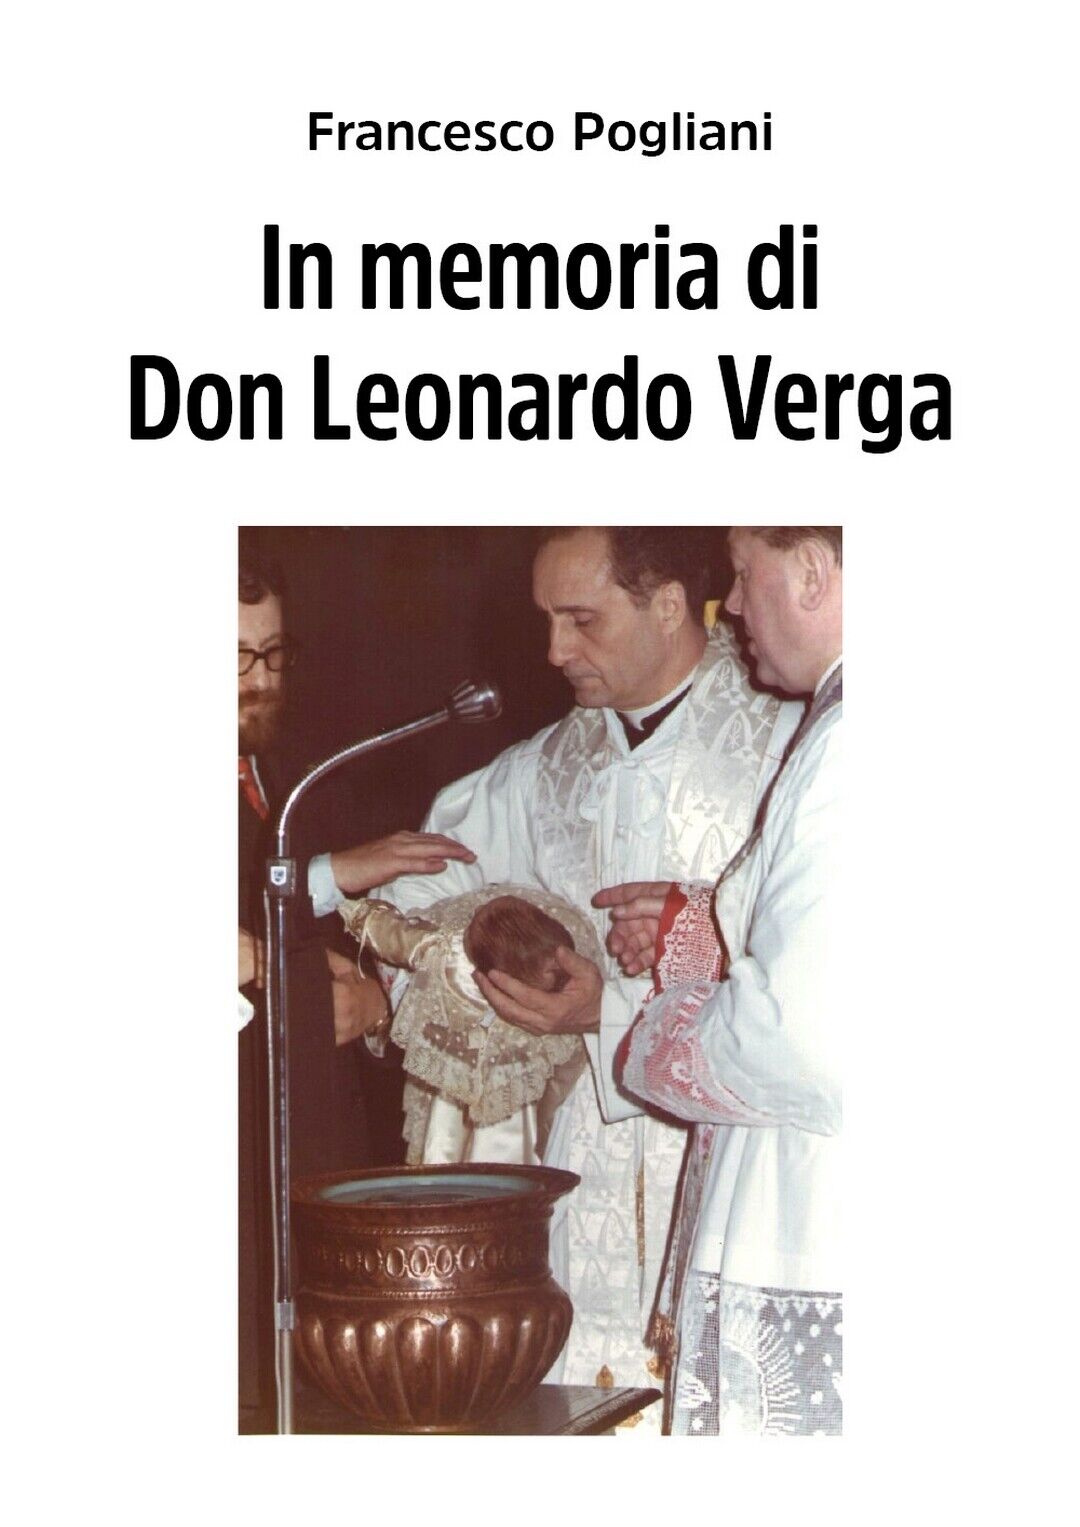 In memoria di Don Leonardo Verga  di Francesco Pogliani,  2020,  Youcanprint